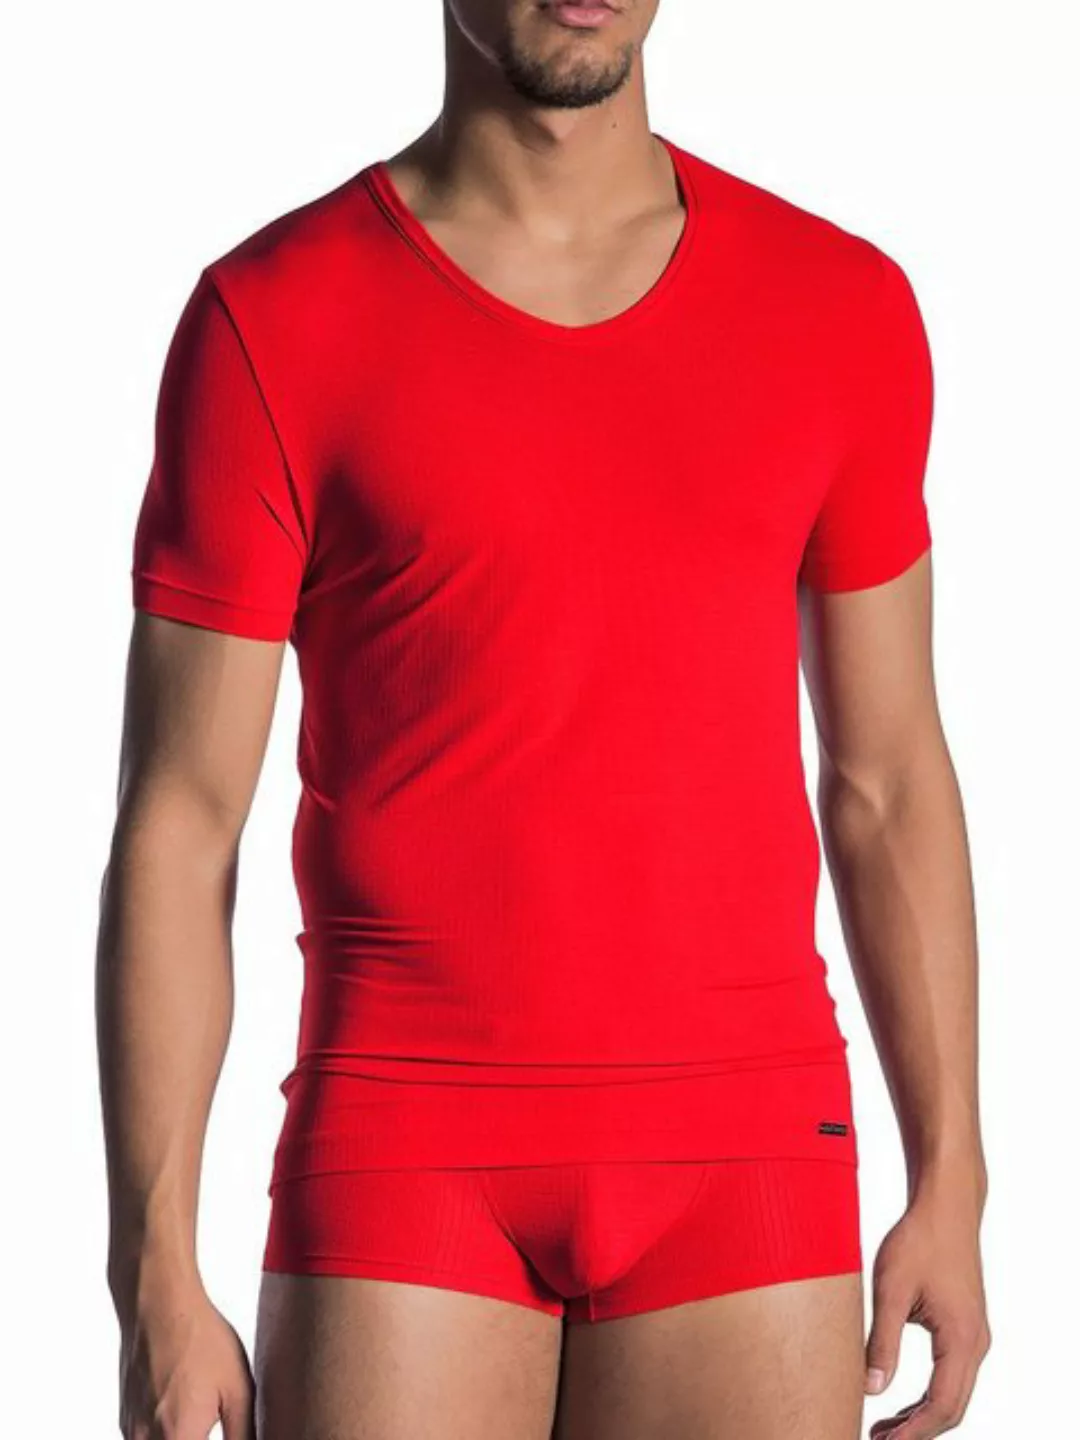 Olaf Benz V-Shirt RED1802 V-Neck rot hauteng XXL günstig online kaufen